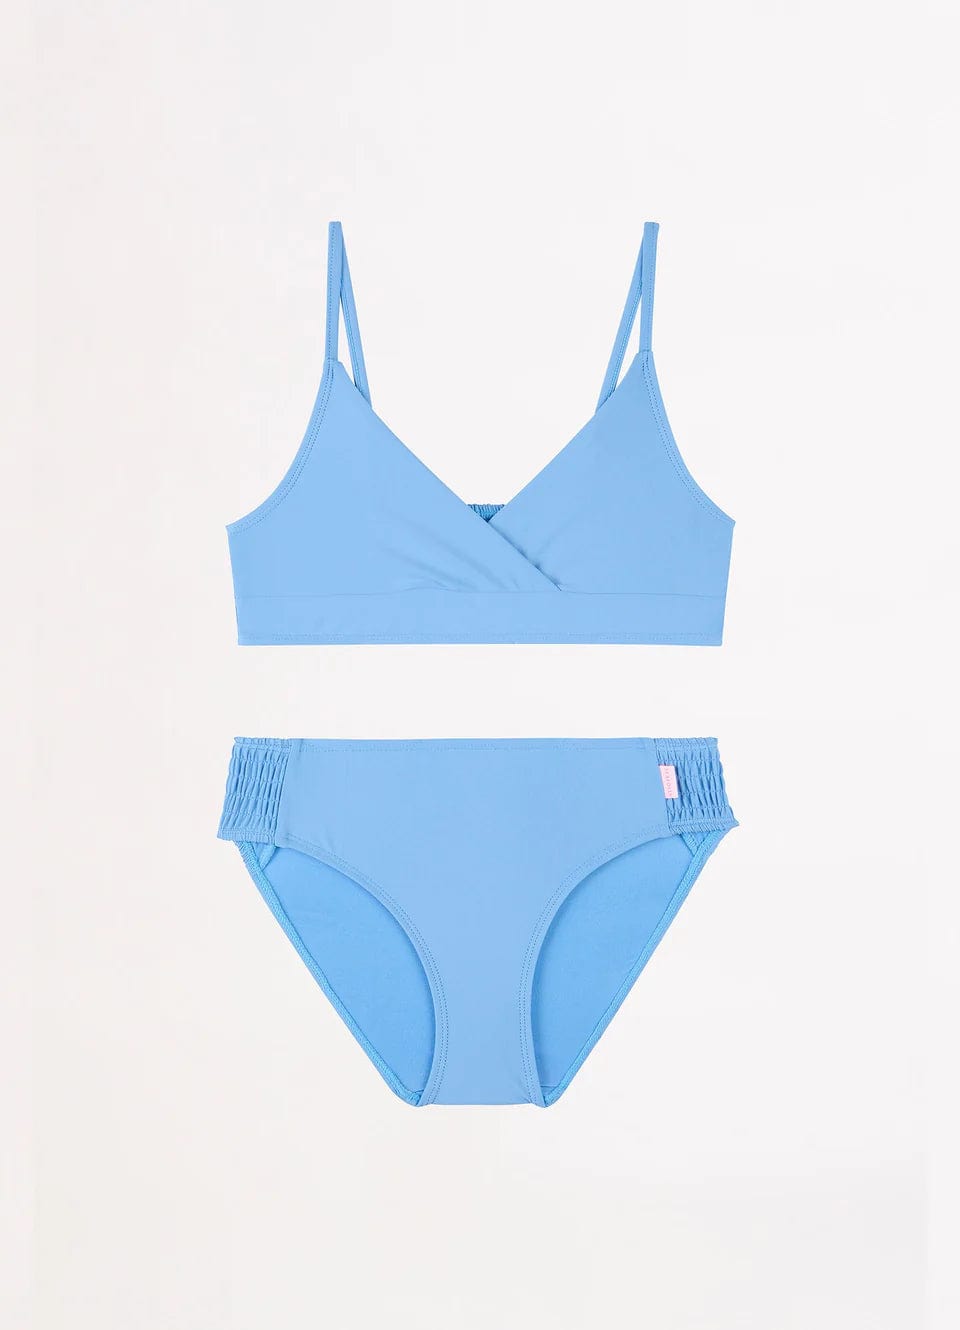 Shop Australian Swimwear Brands: Summer Solstice Strappy Bikini ...